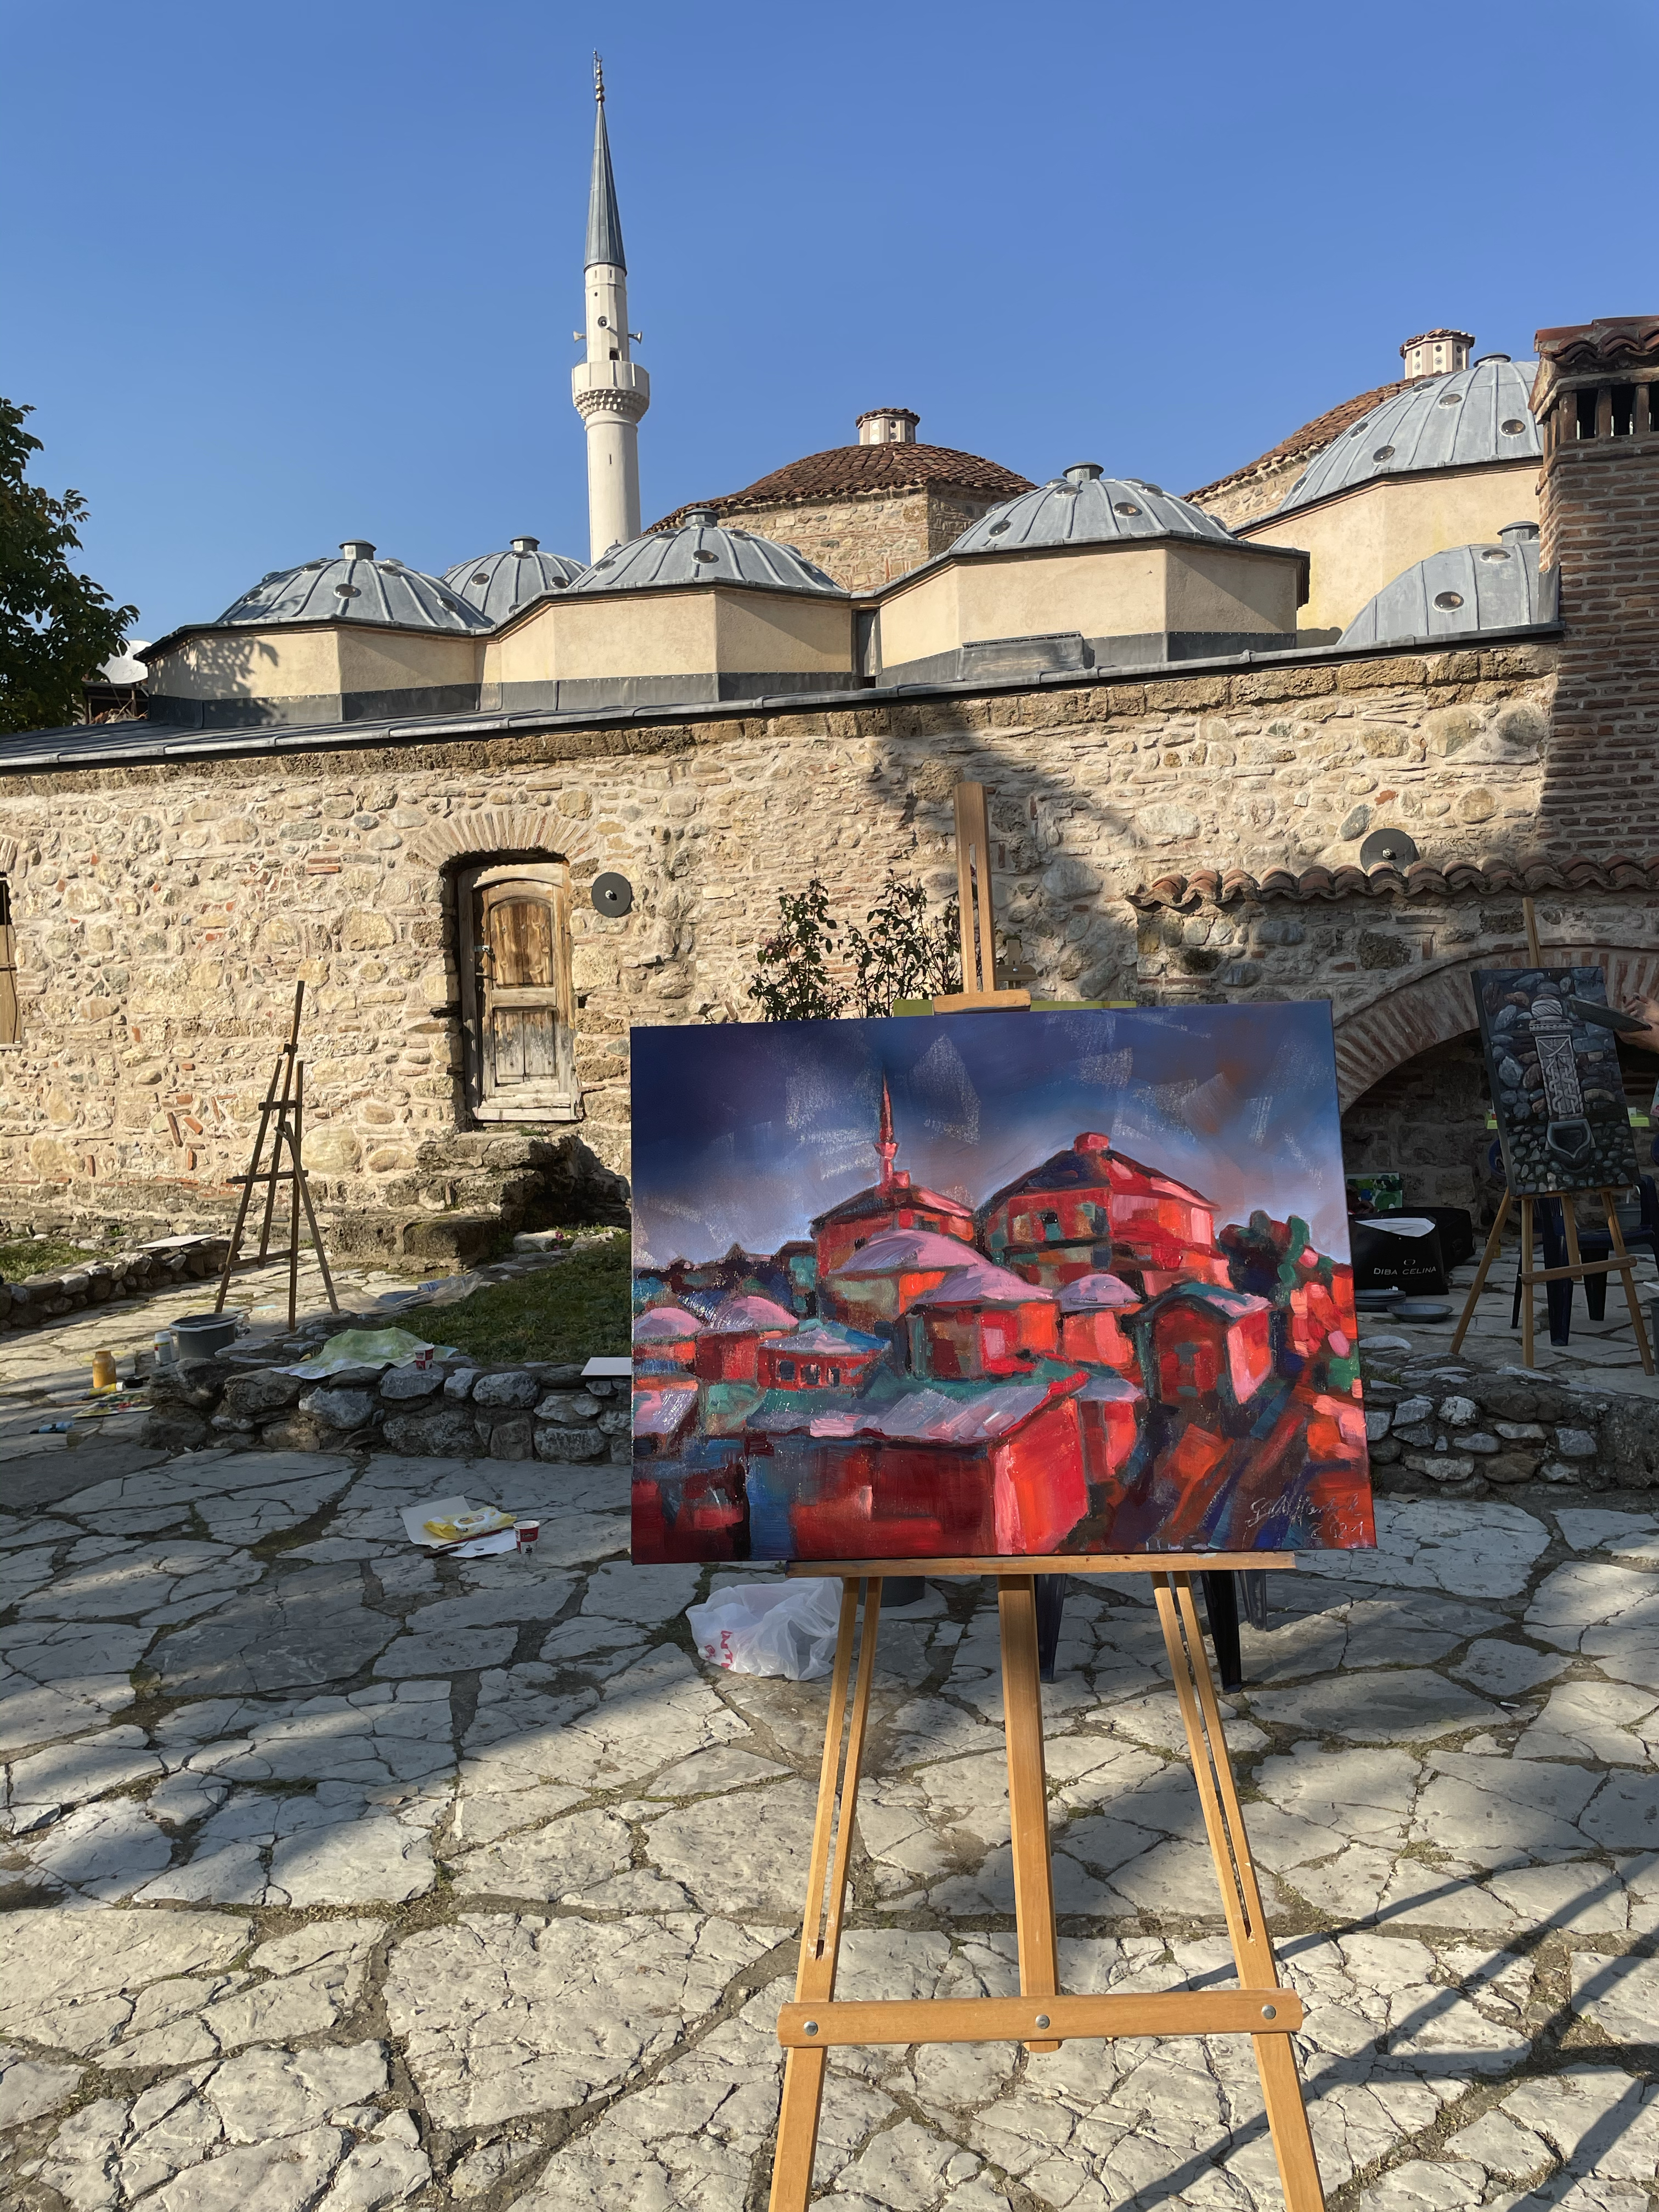 Ul. Sanatla Uyanmak Festival in Prizen Kosovo, 2021